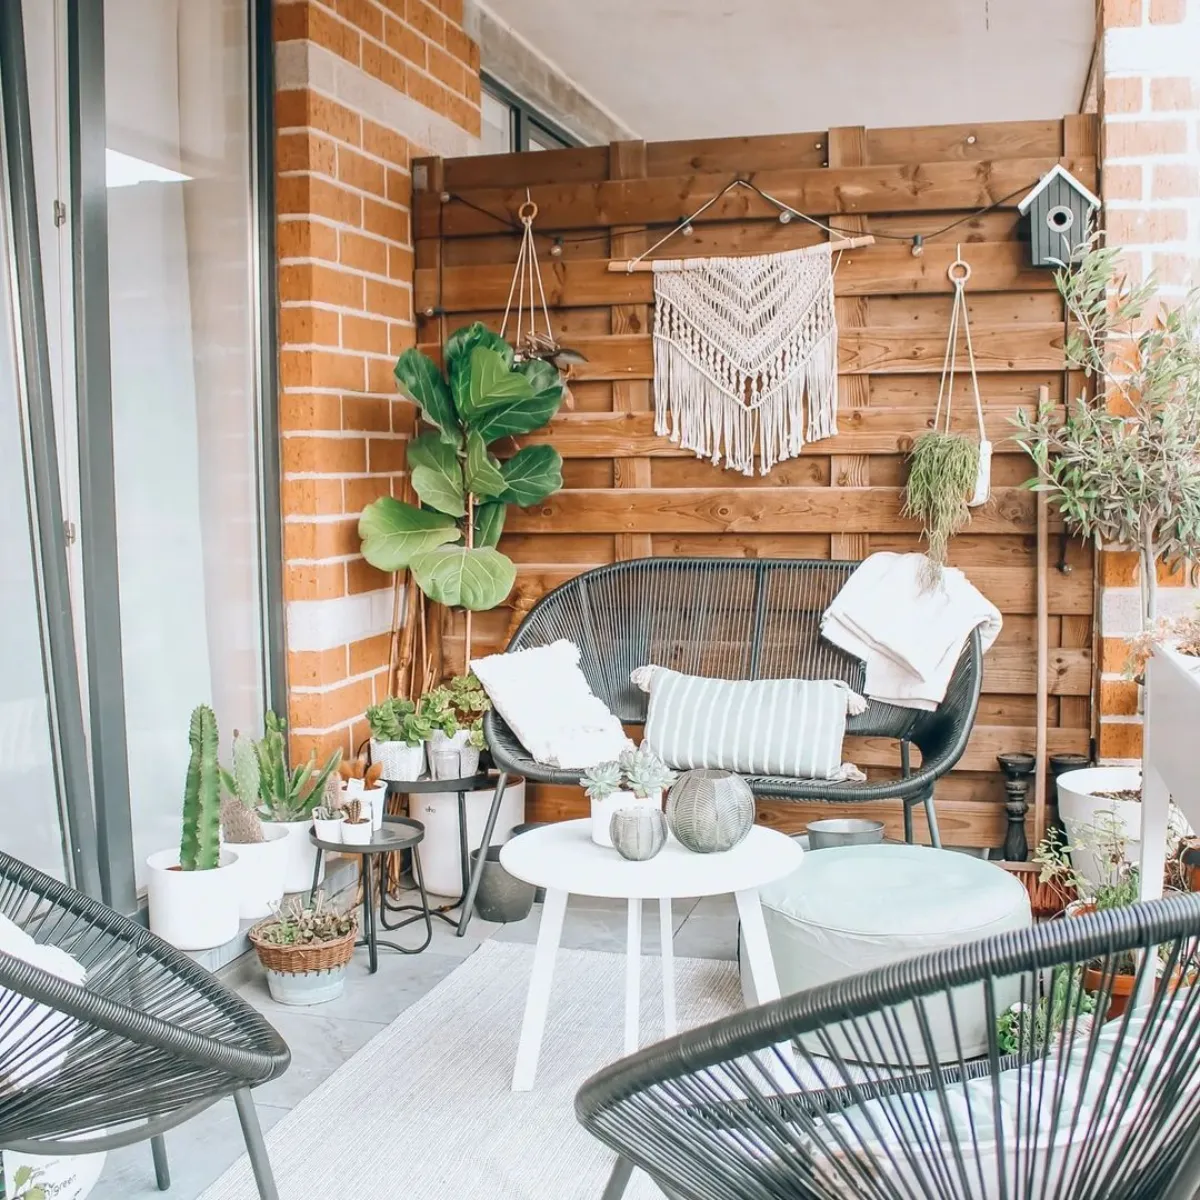 salon de jardin en metal aec canapé fauteuils table minimaliste mur de palette de bois